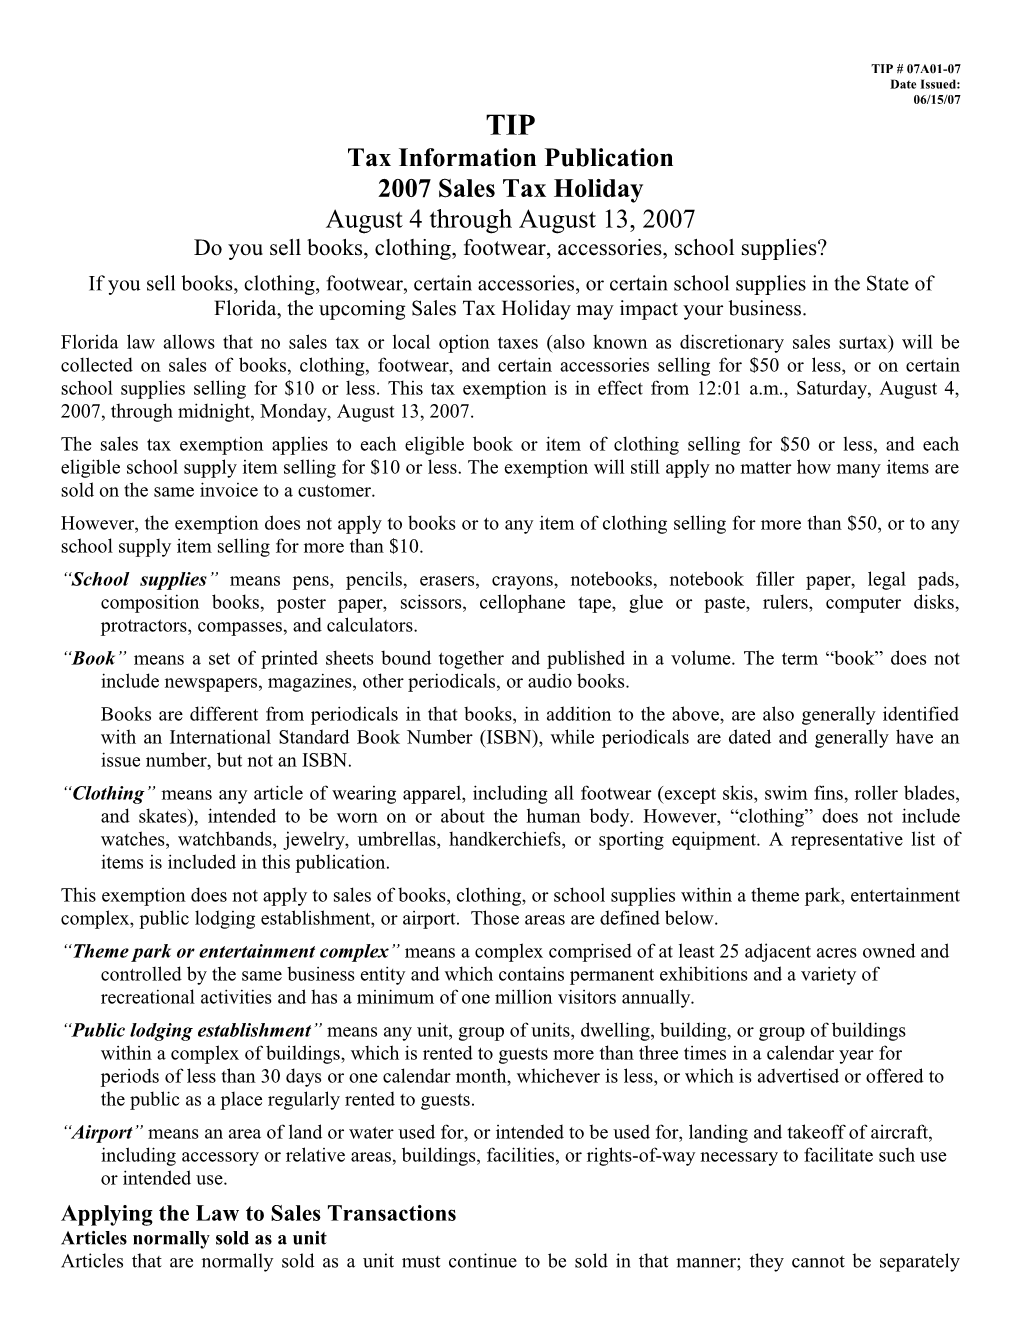 2007 Sales Tax Holiday (Aug 4 - Aug 13, 2007)